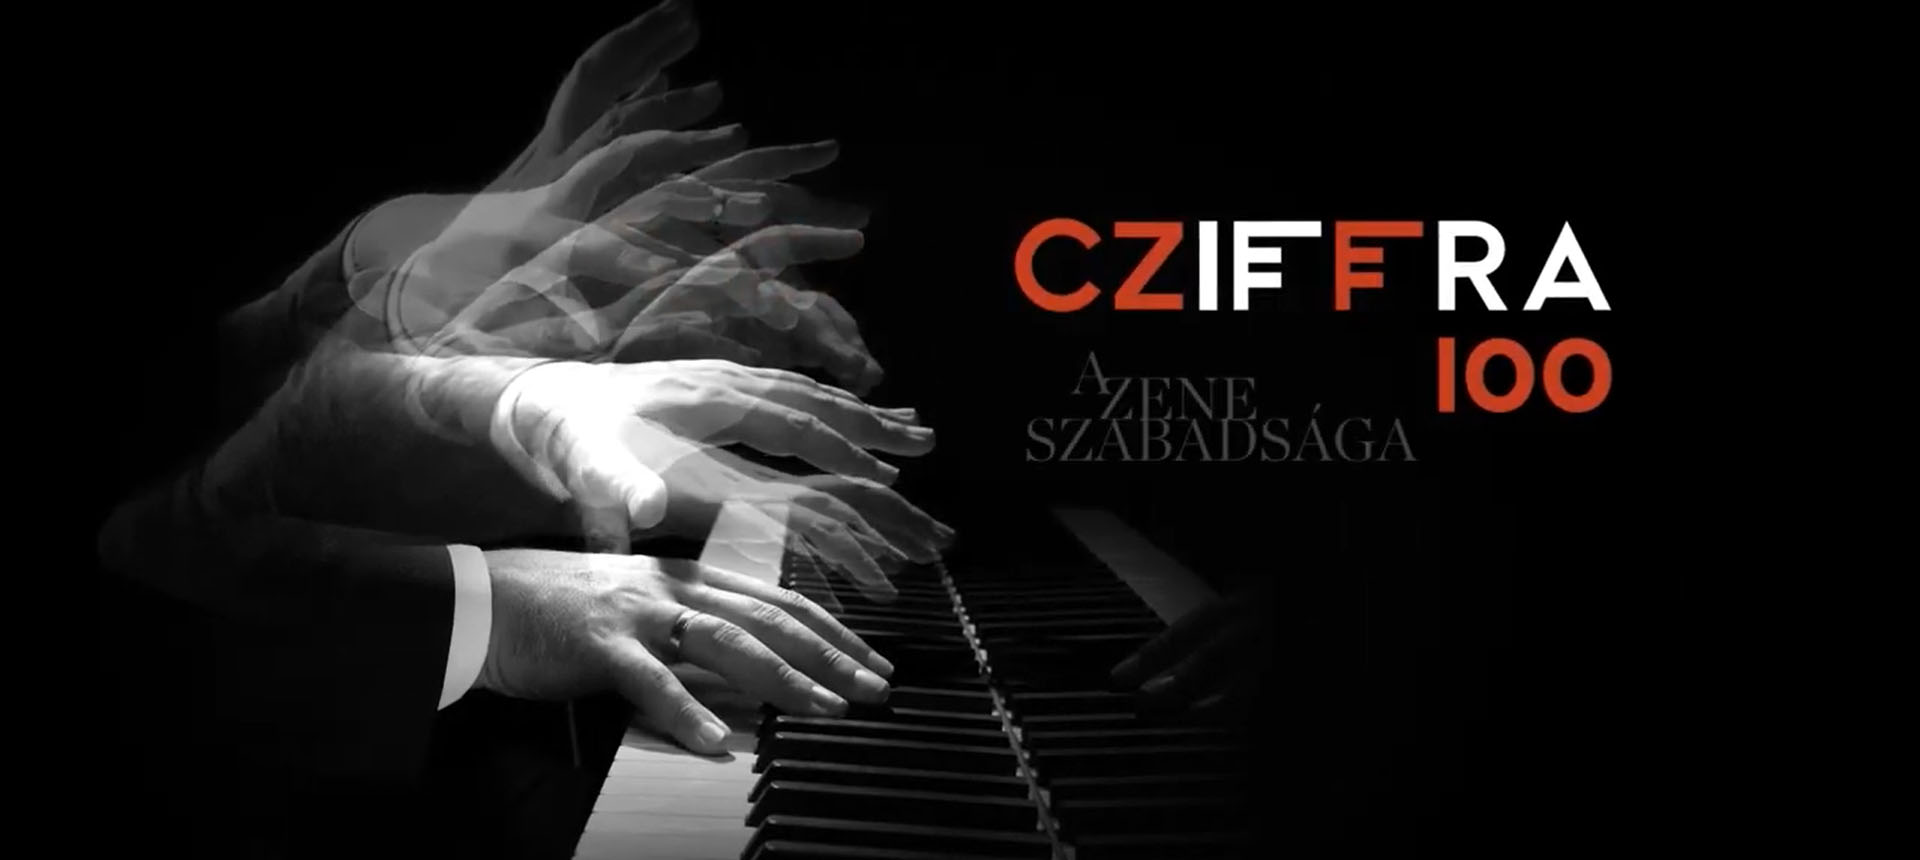 György Cziffra programmes worldwide